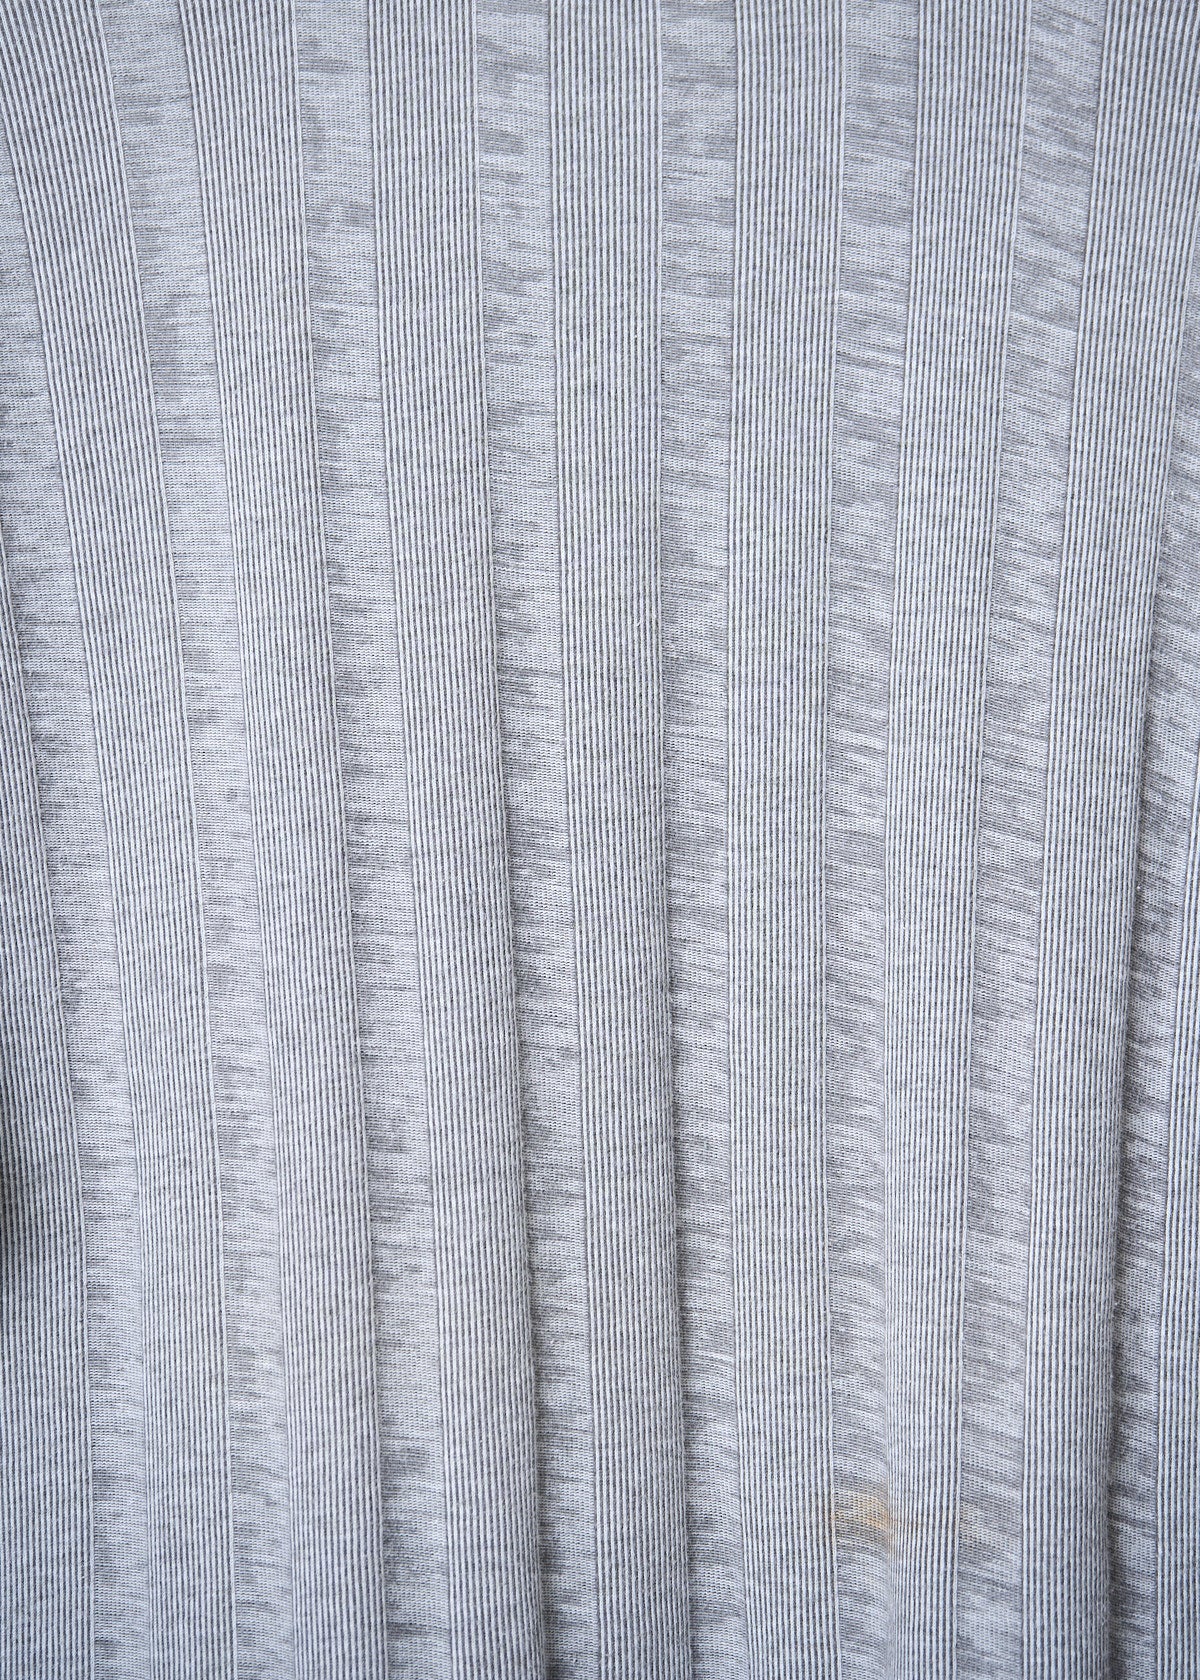 CDG Homme Grey Striped Cotton Polo 1990's - Medium